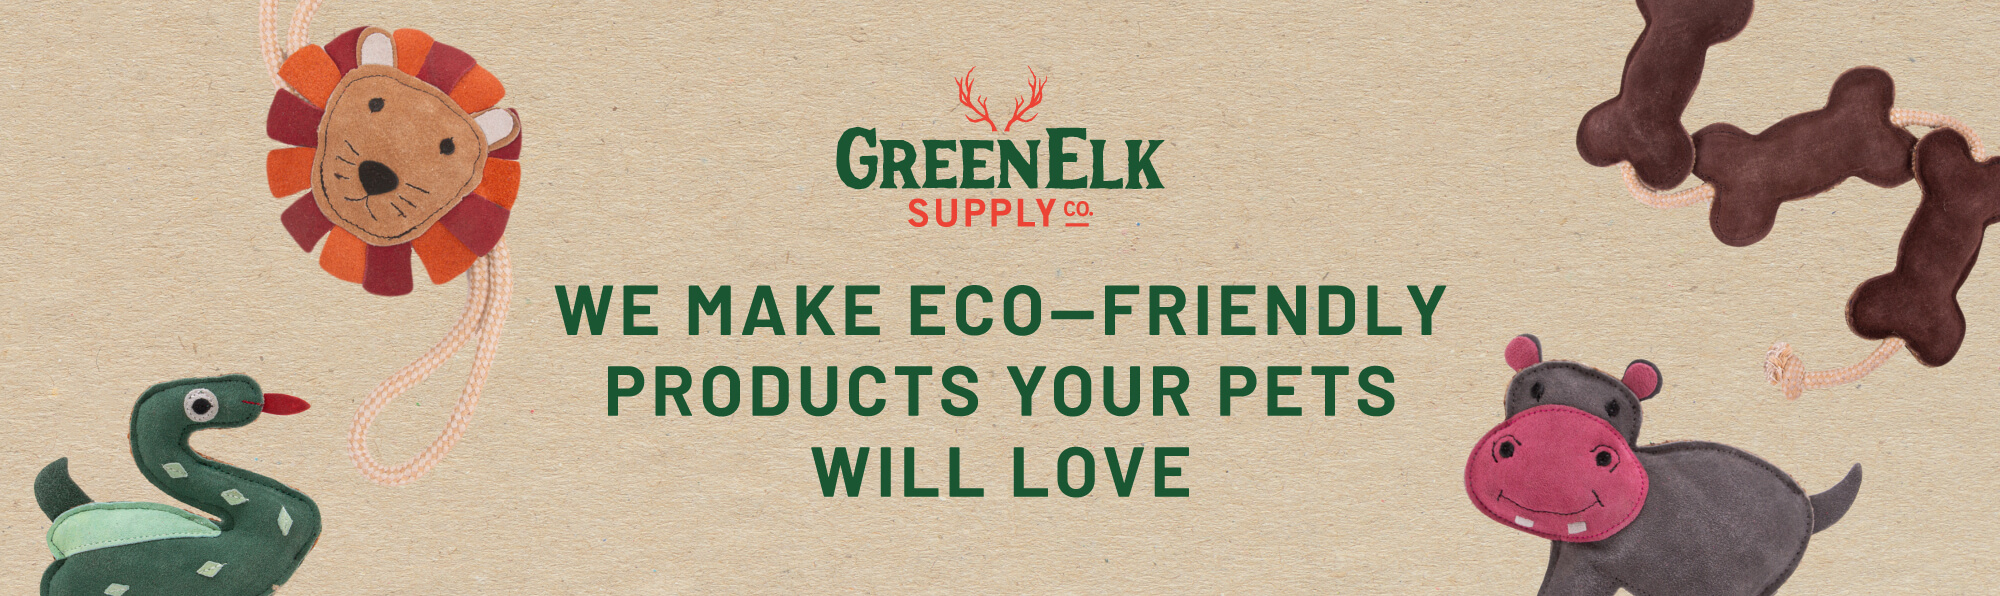 Green Elk eco friendly pet products